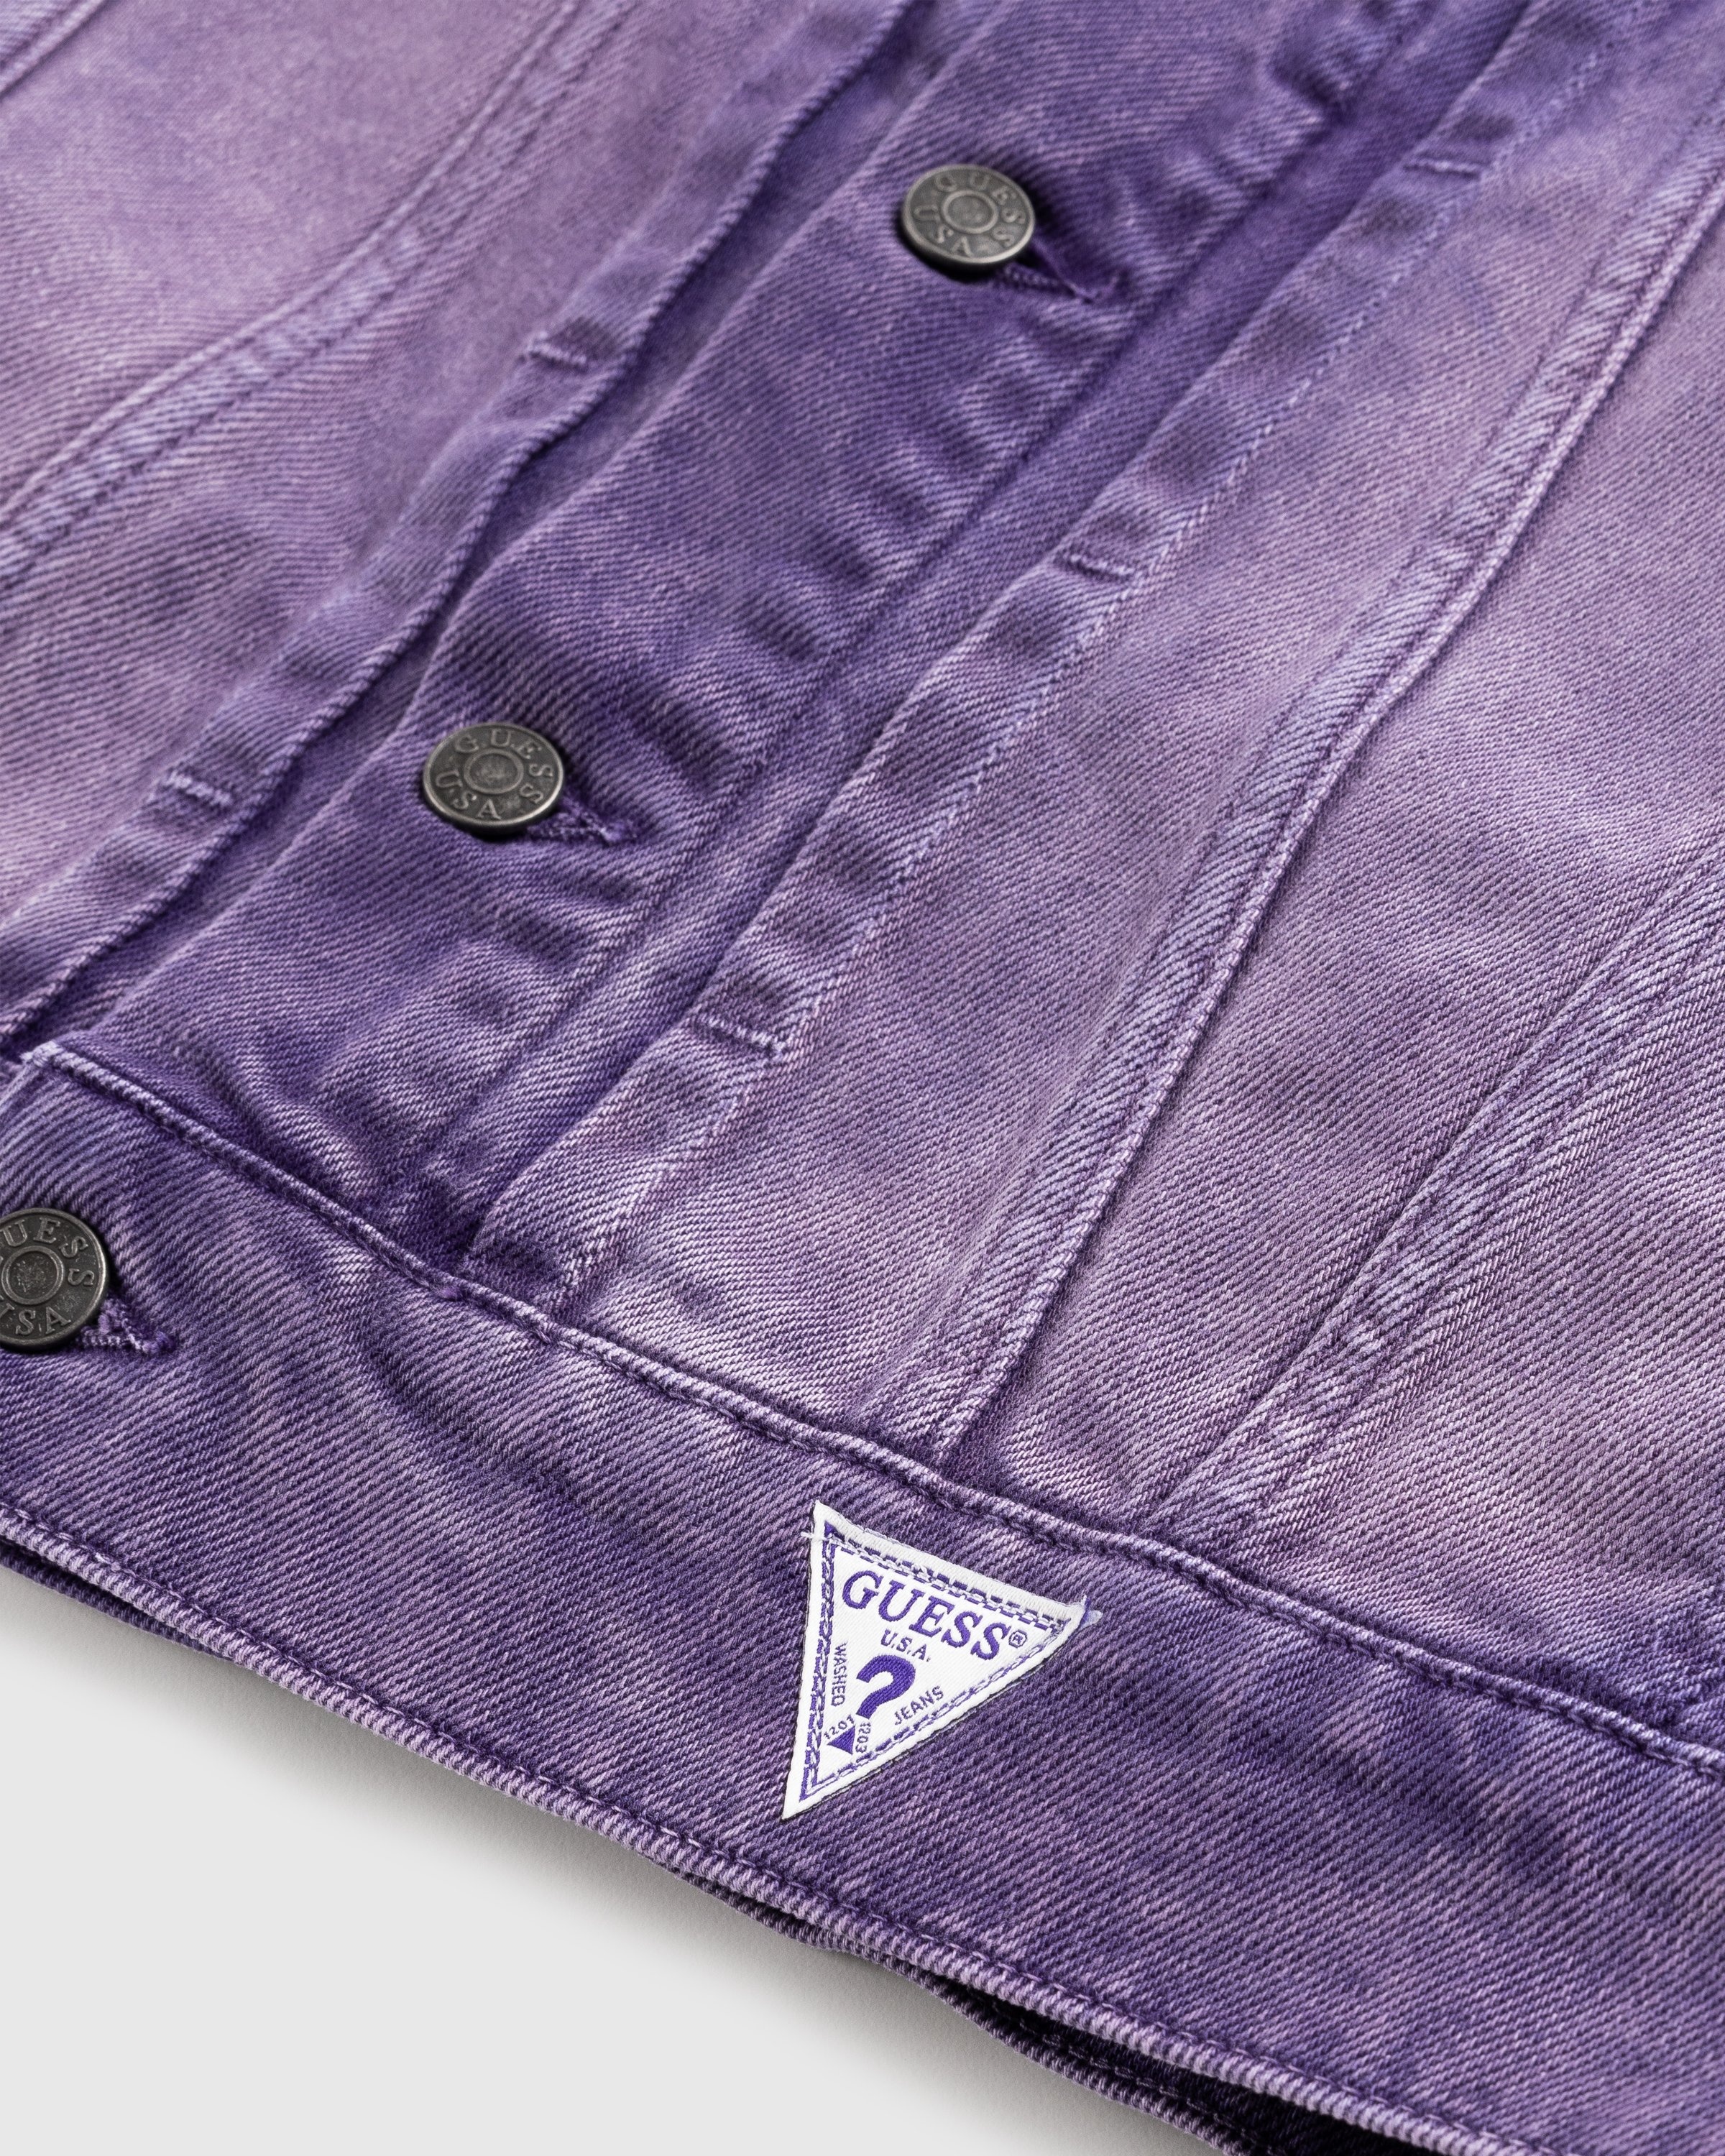 Guess USA – Vintage Denim Jacket Purple   Highsnobiety Shop